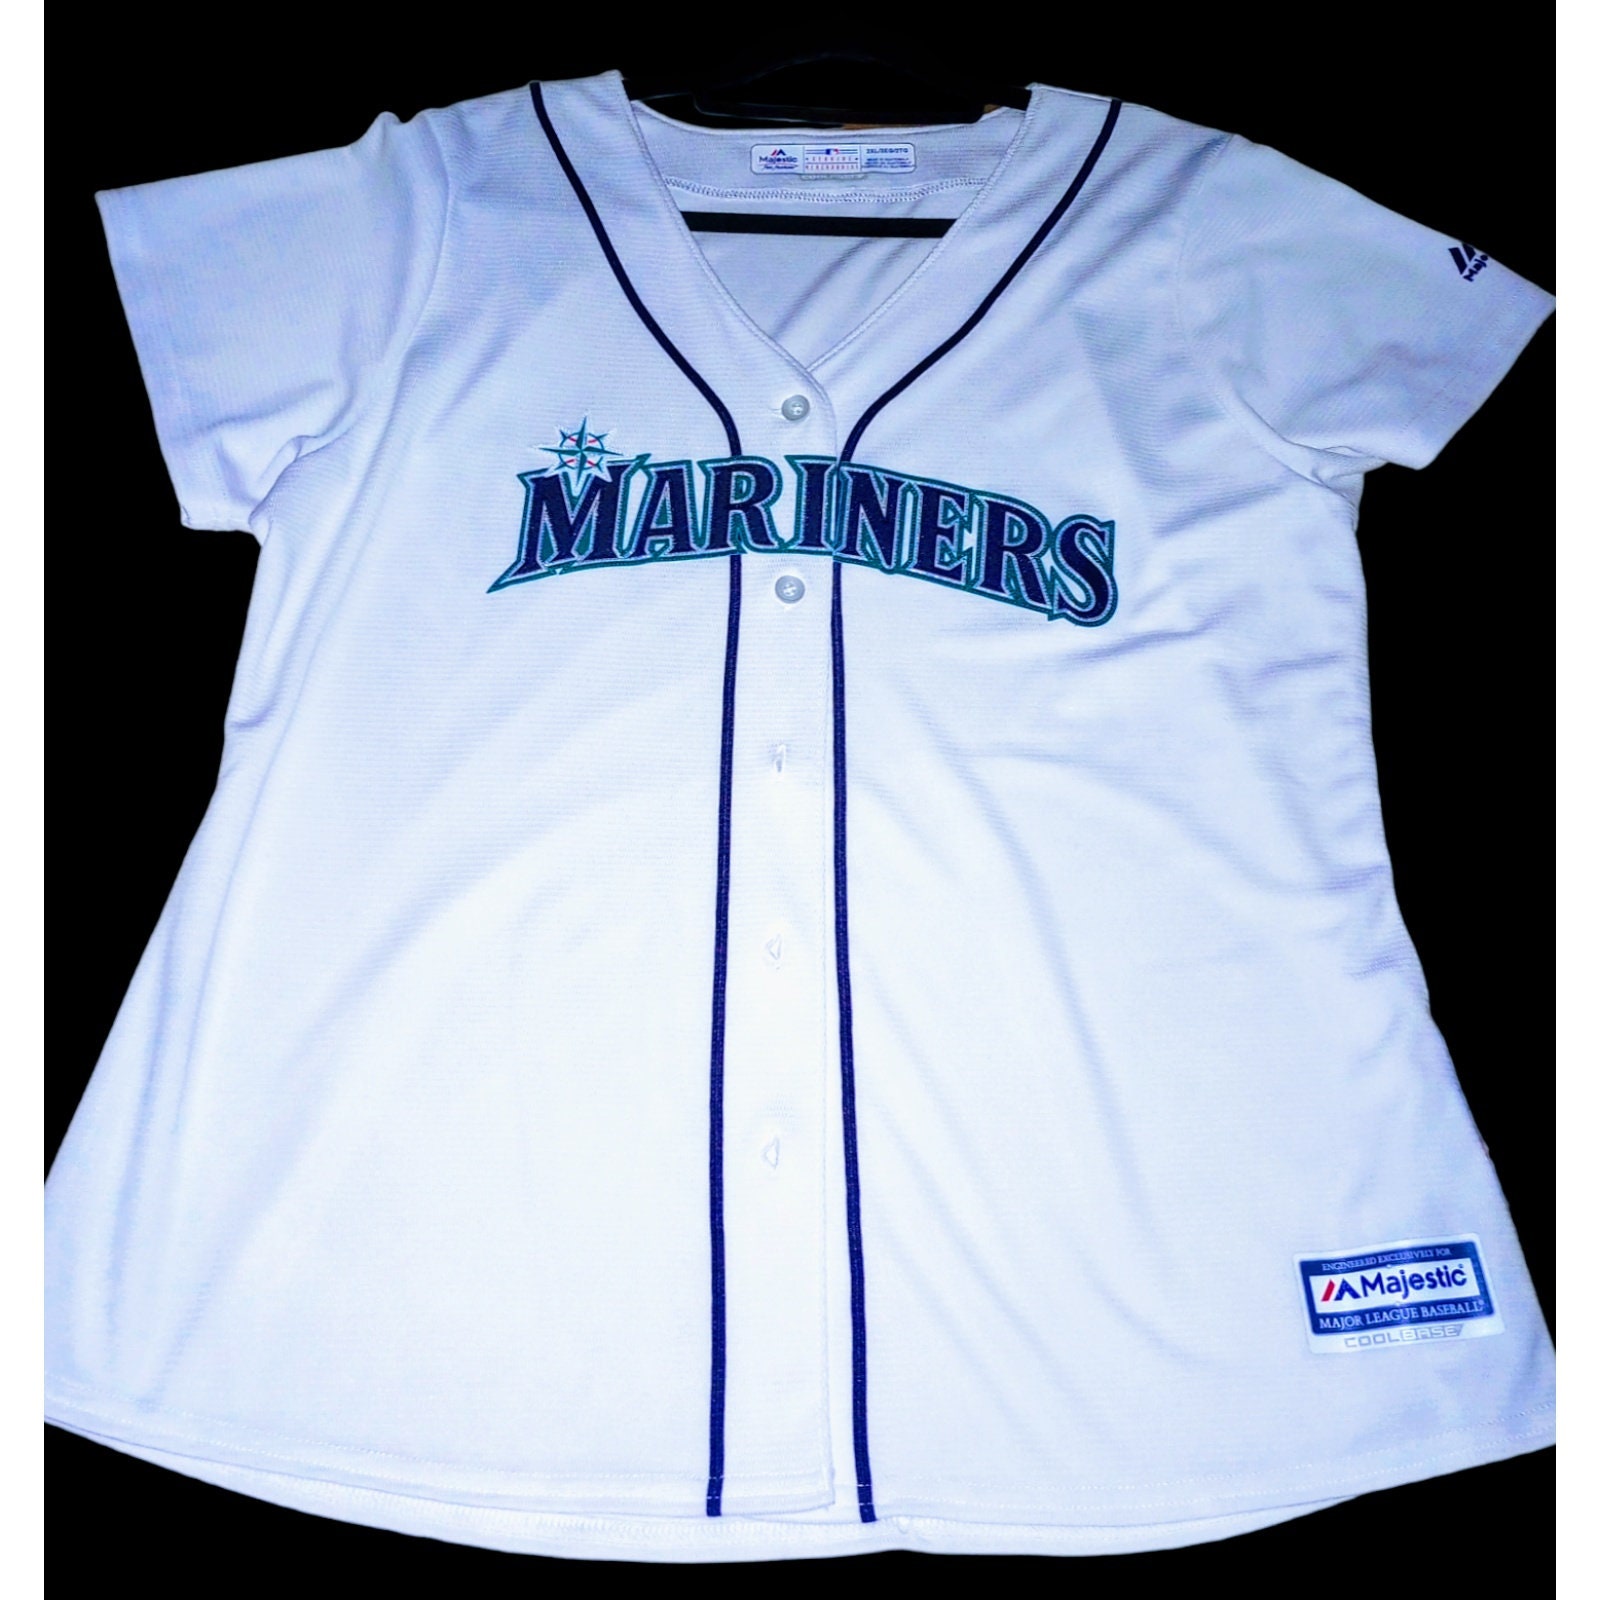 Ichiro Suzuki Signed Seattle Mariners Majestic LED Framed Blue MLB Jersey